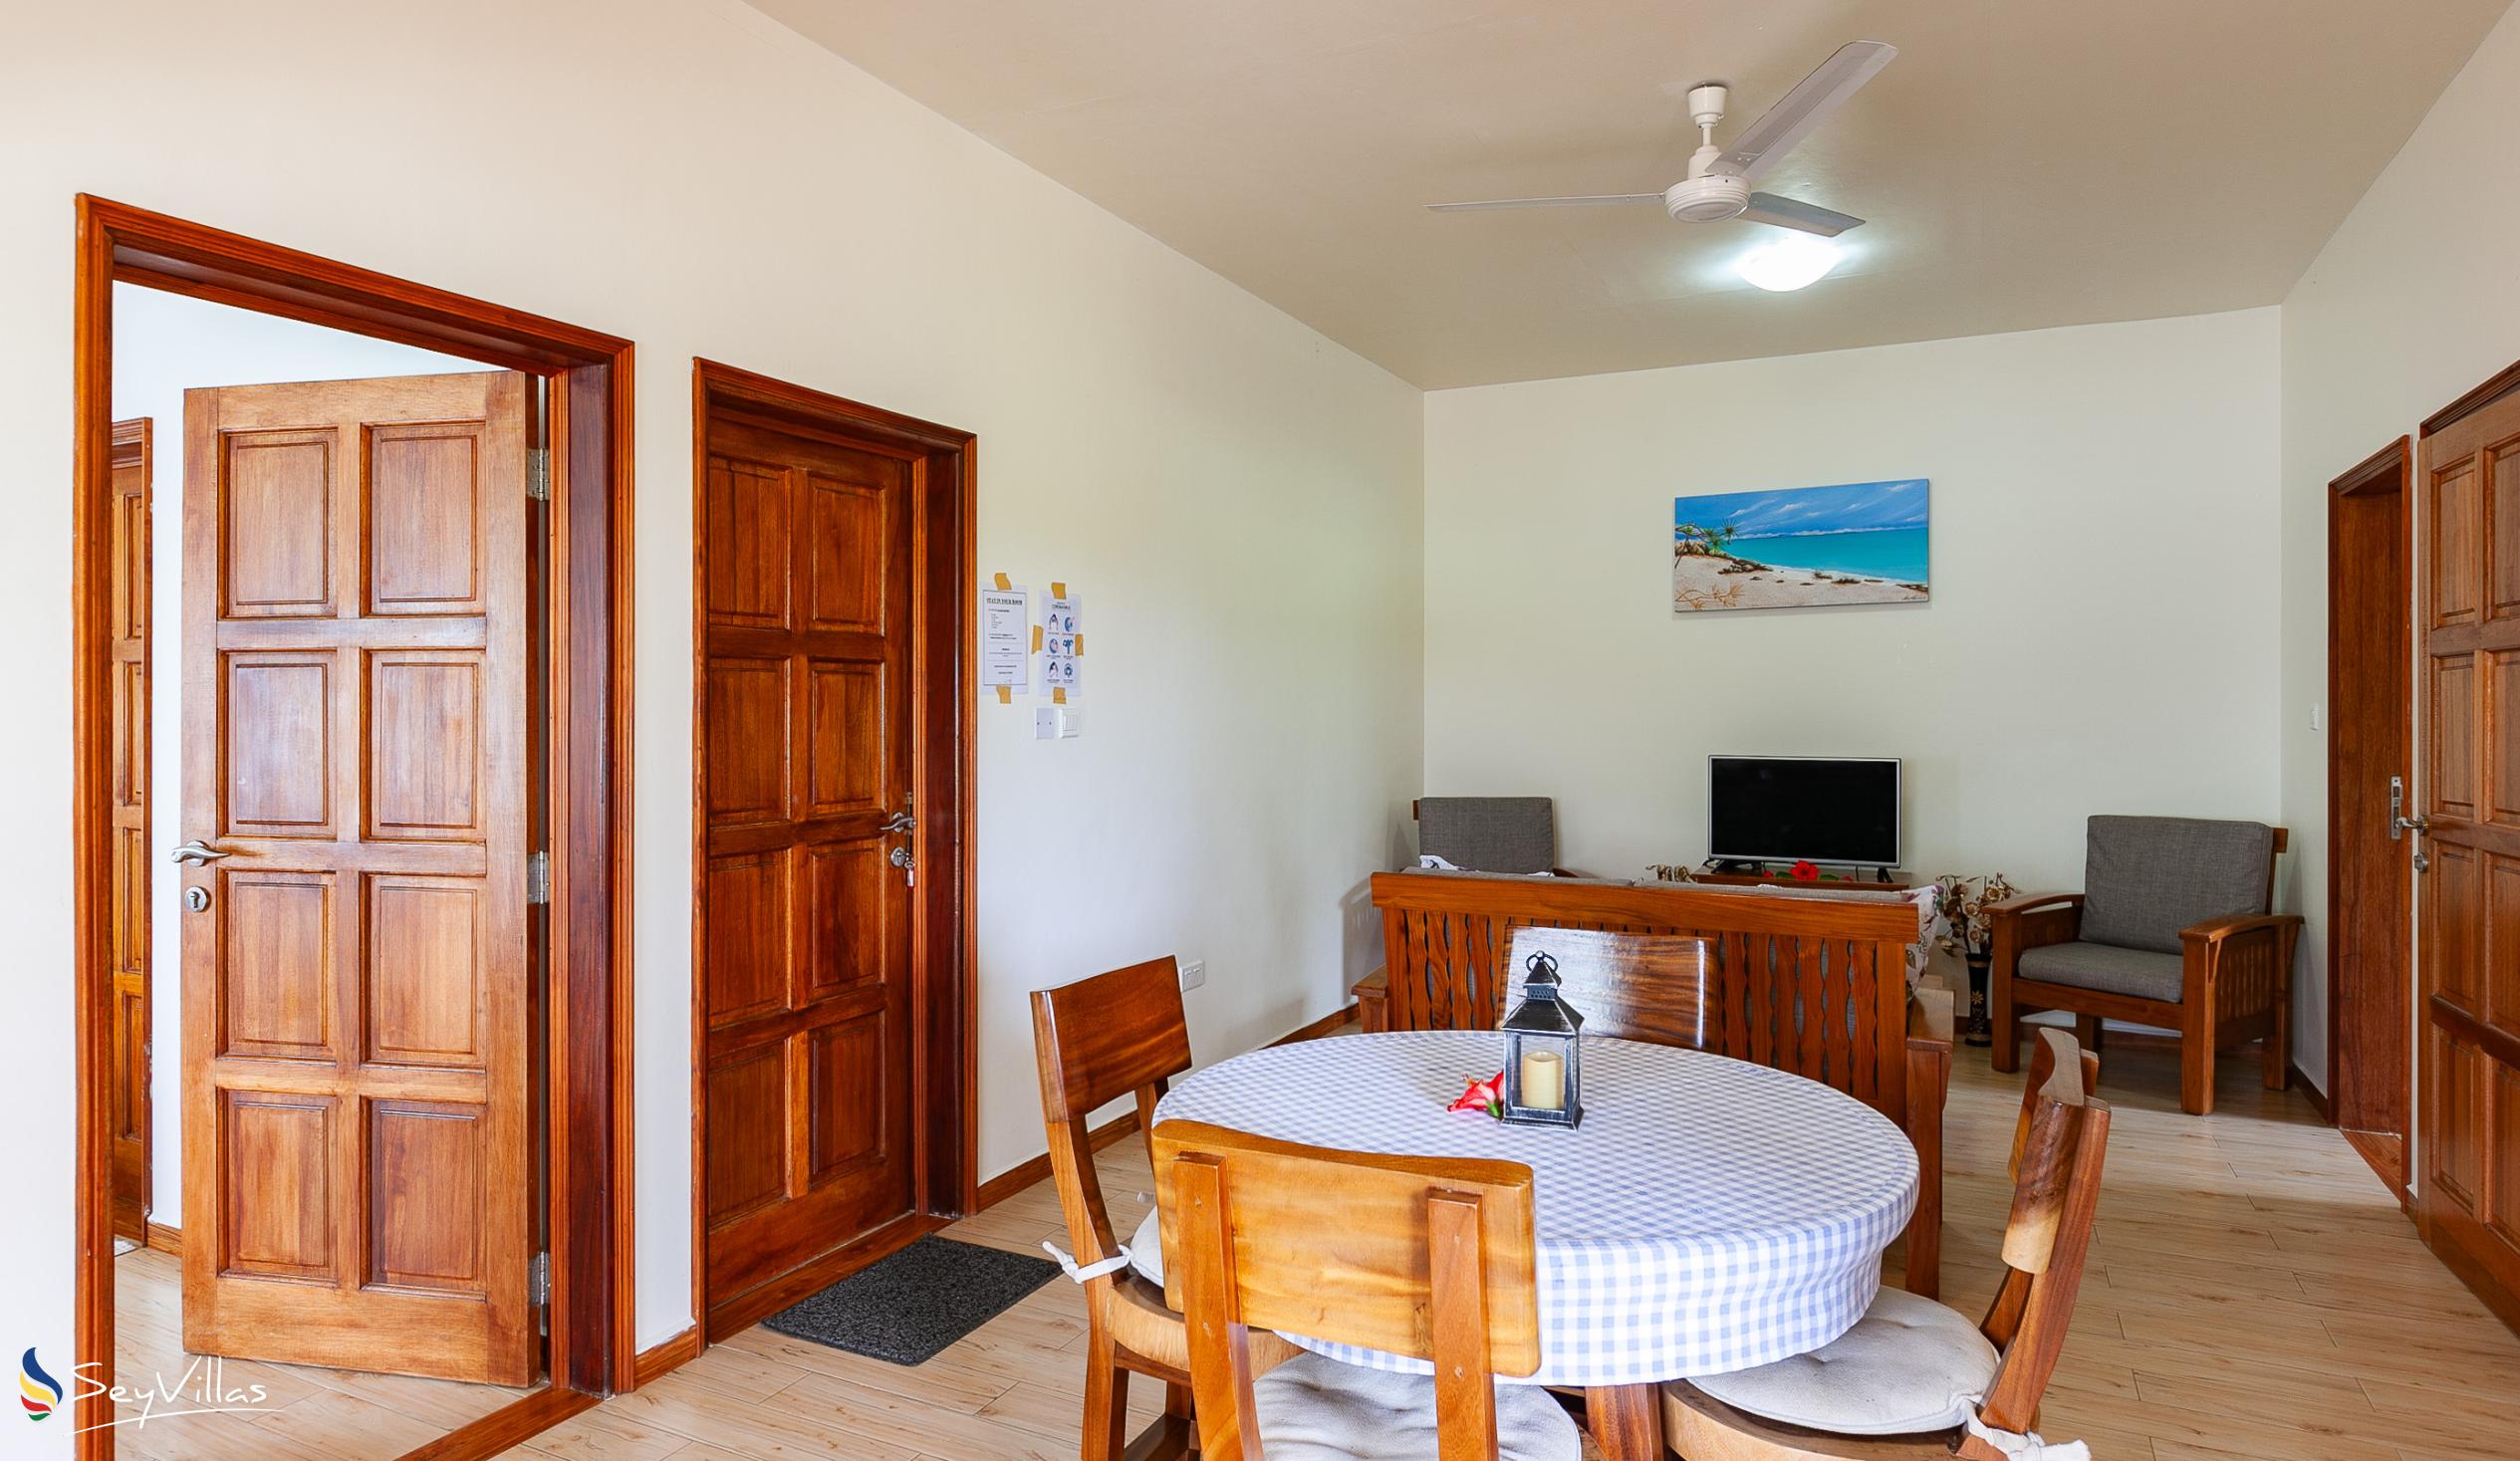 Foto 63: Seashell Beach Villa - Appartement 2 chambres - Praslin (Seychelles)